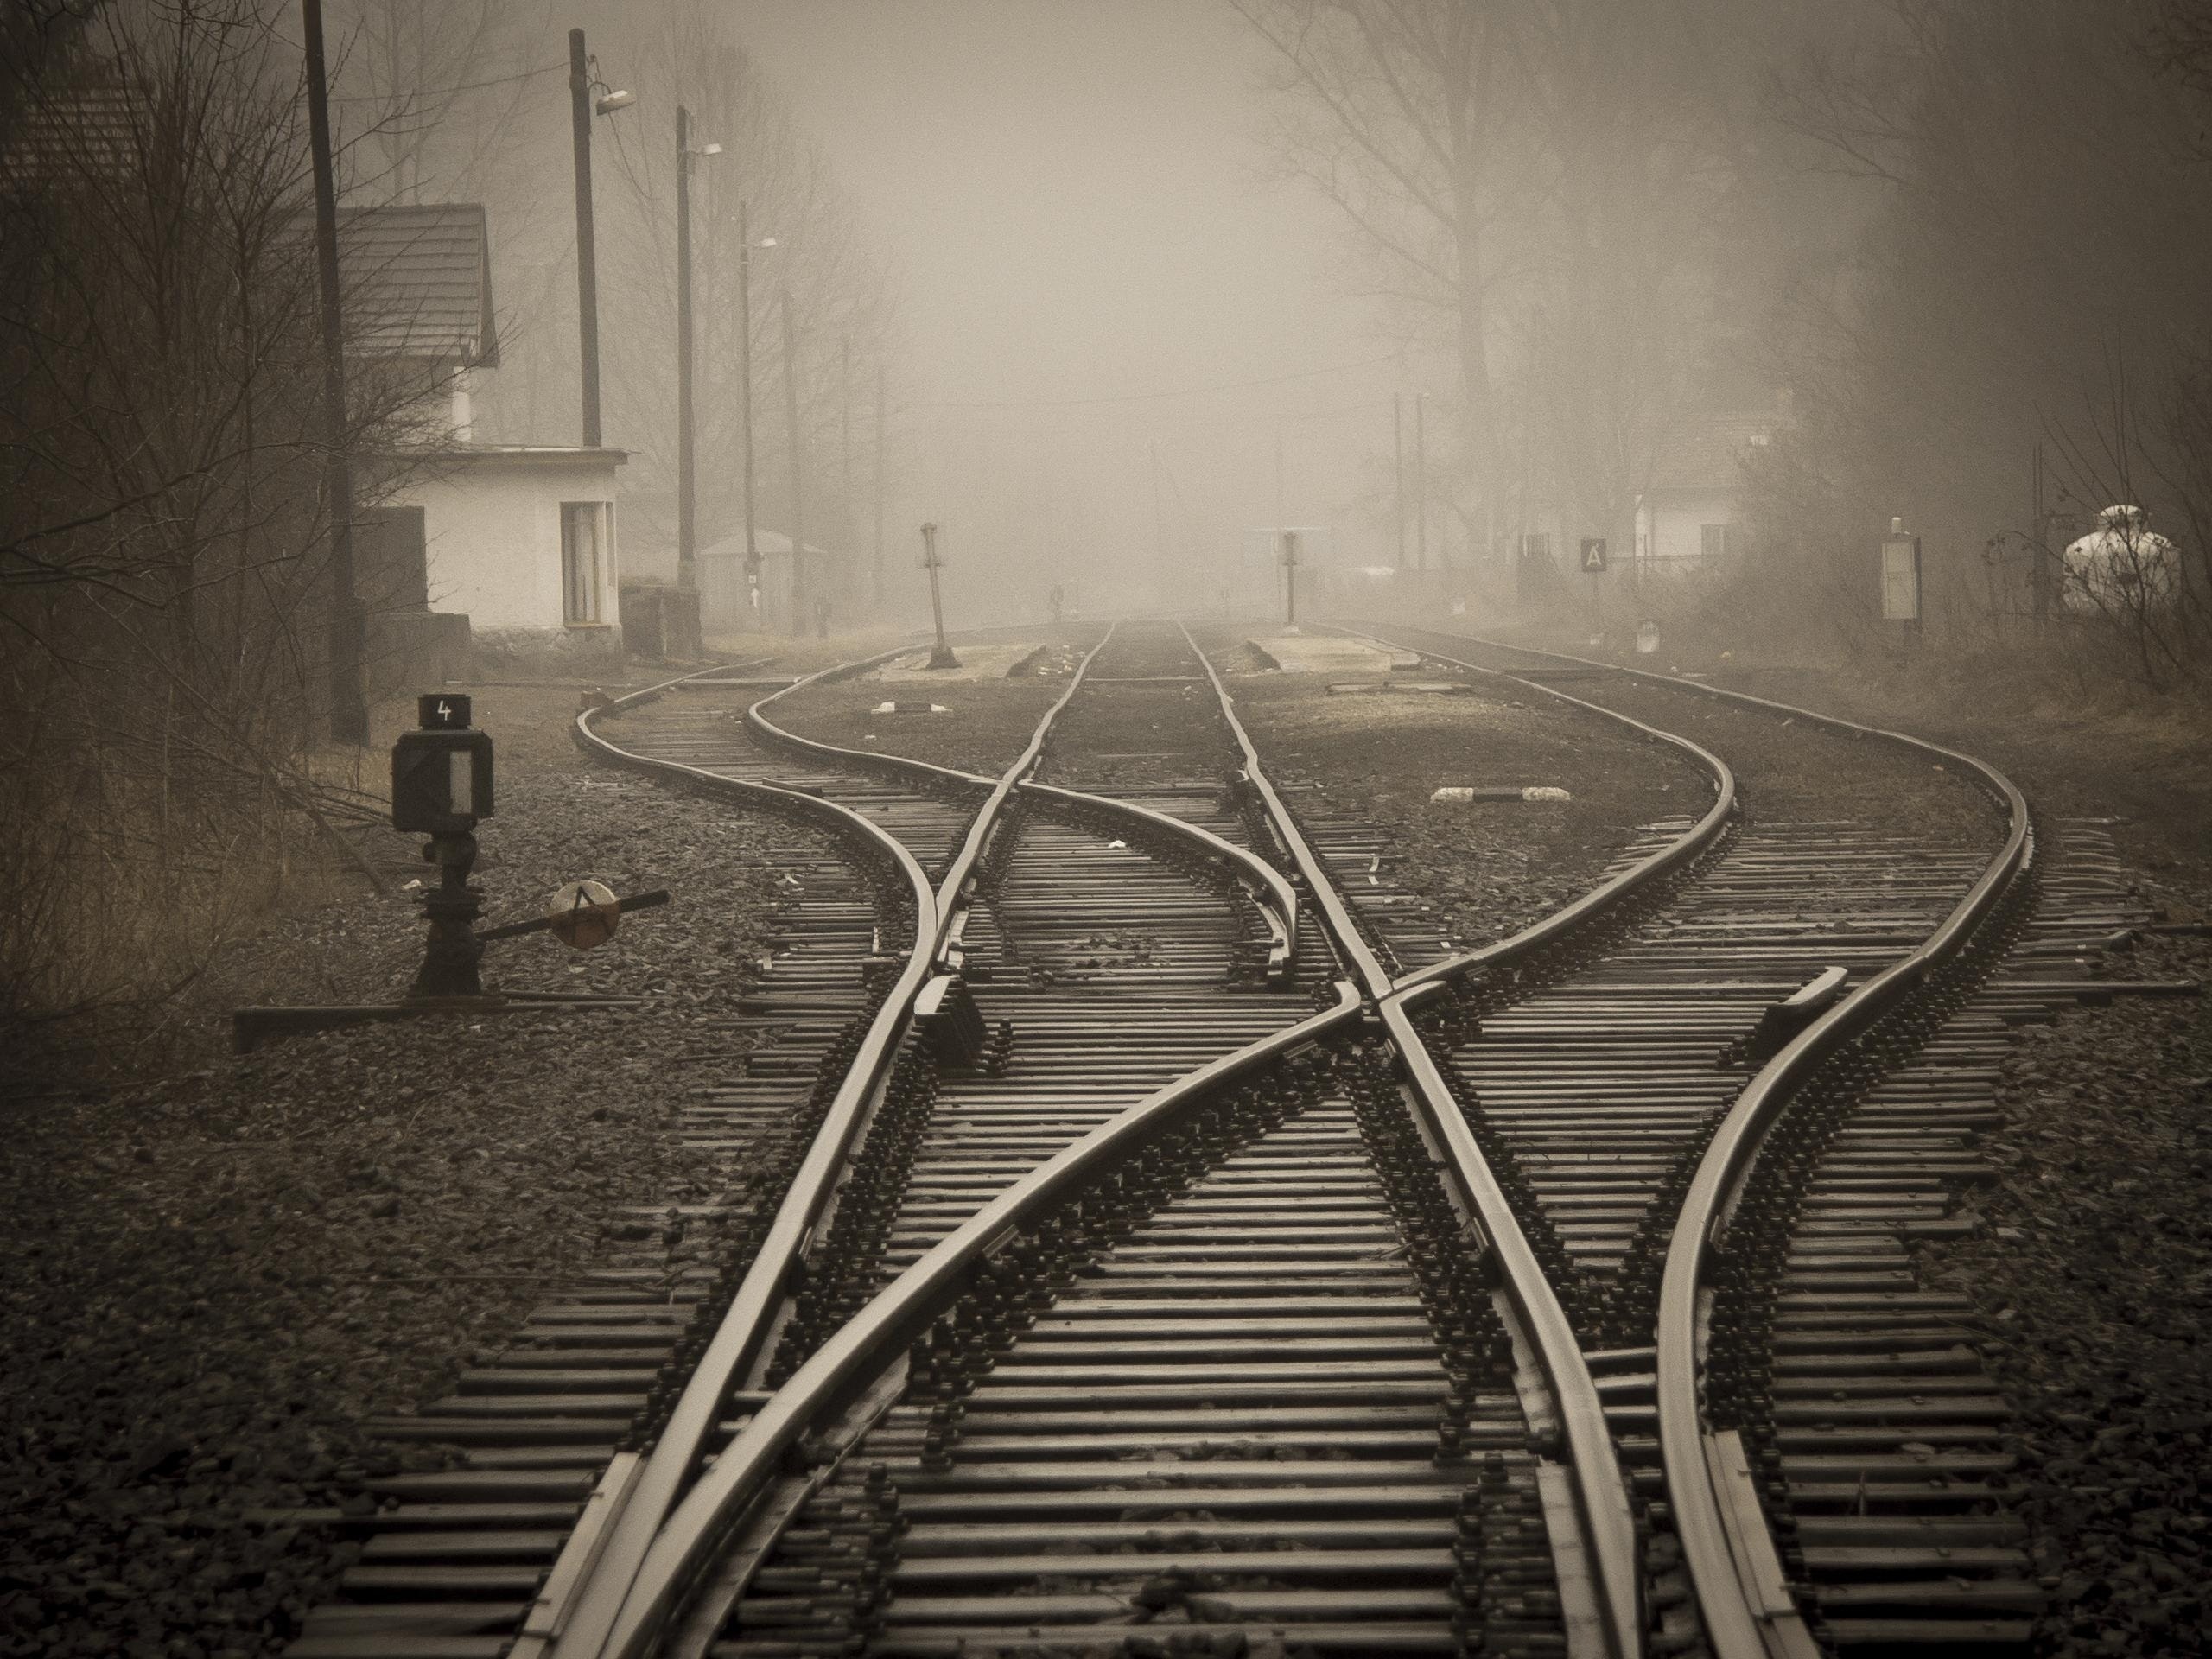 Train Tracks in mist